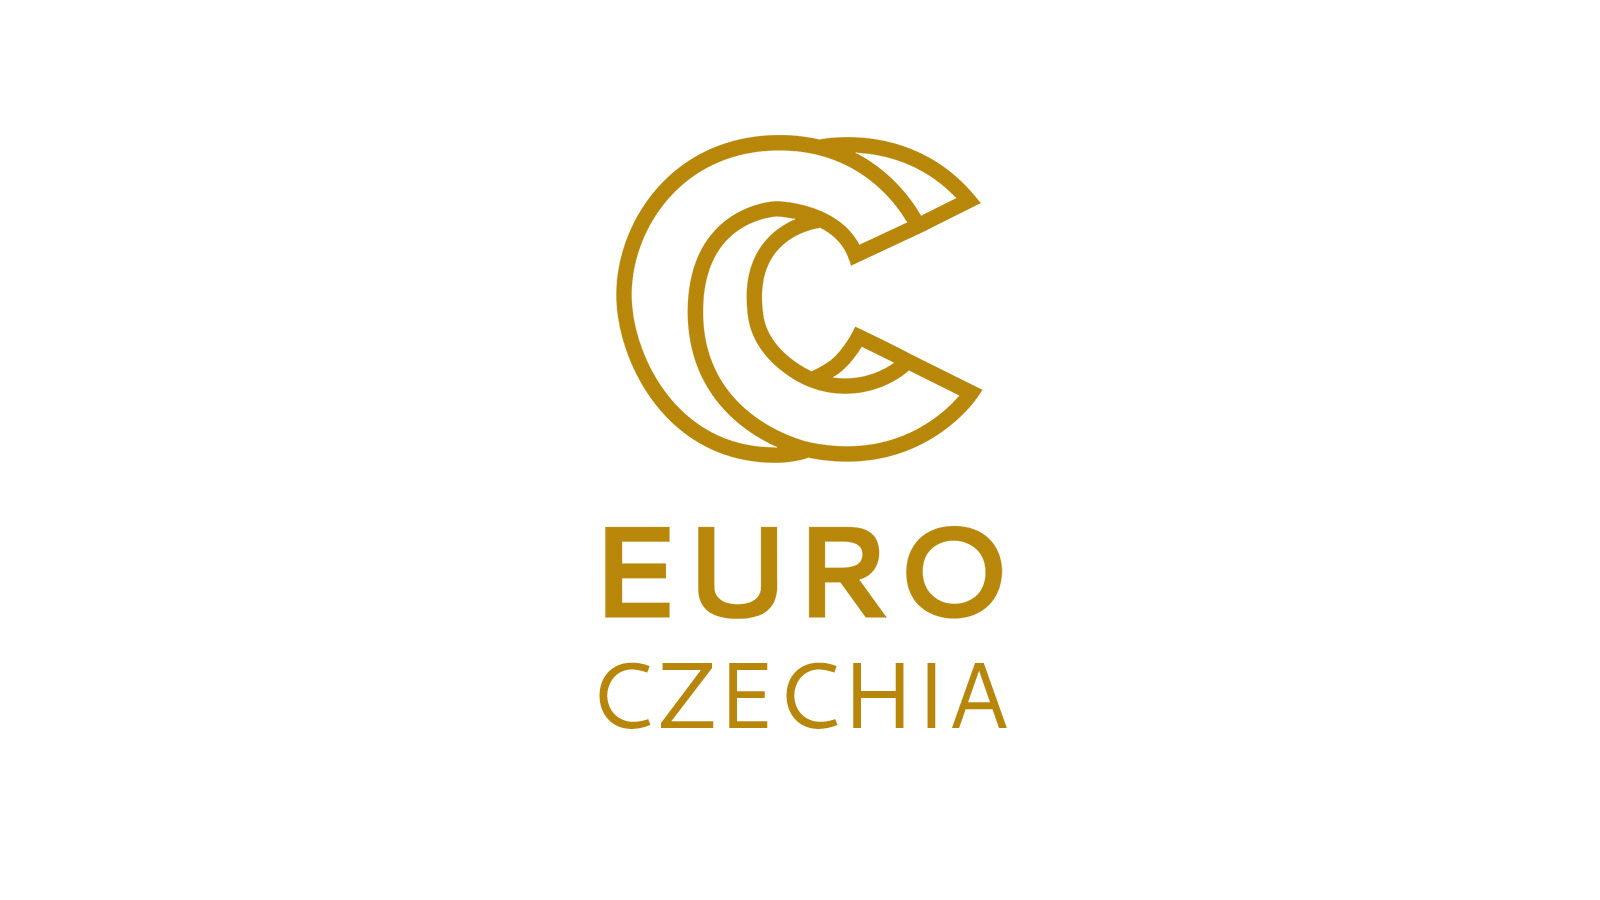 EuroCC_czechia_16x9